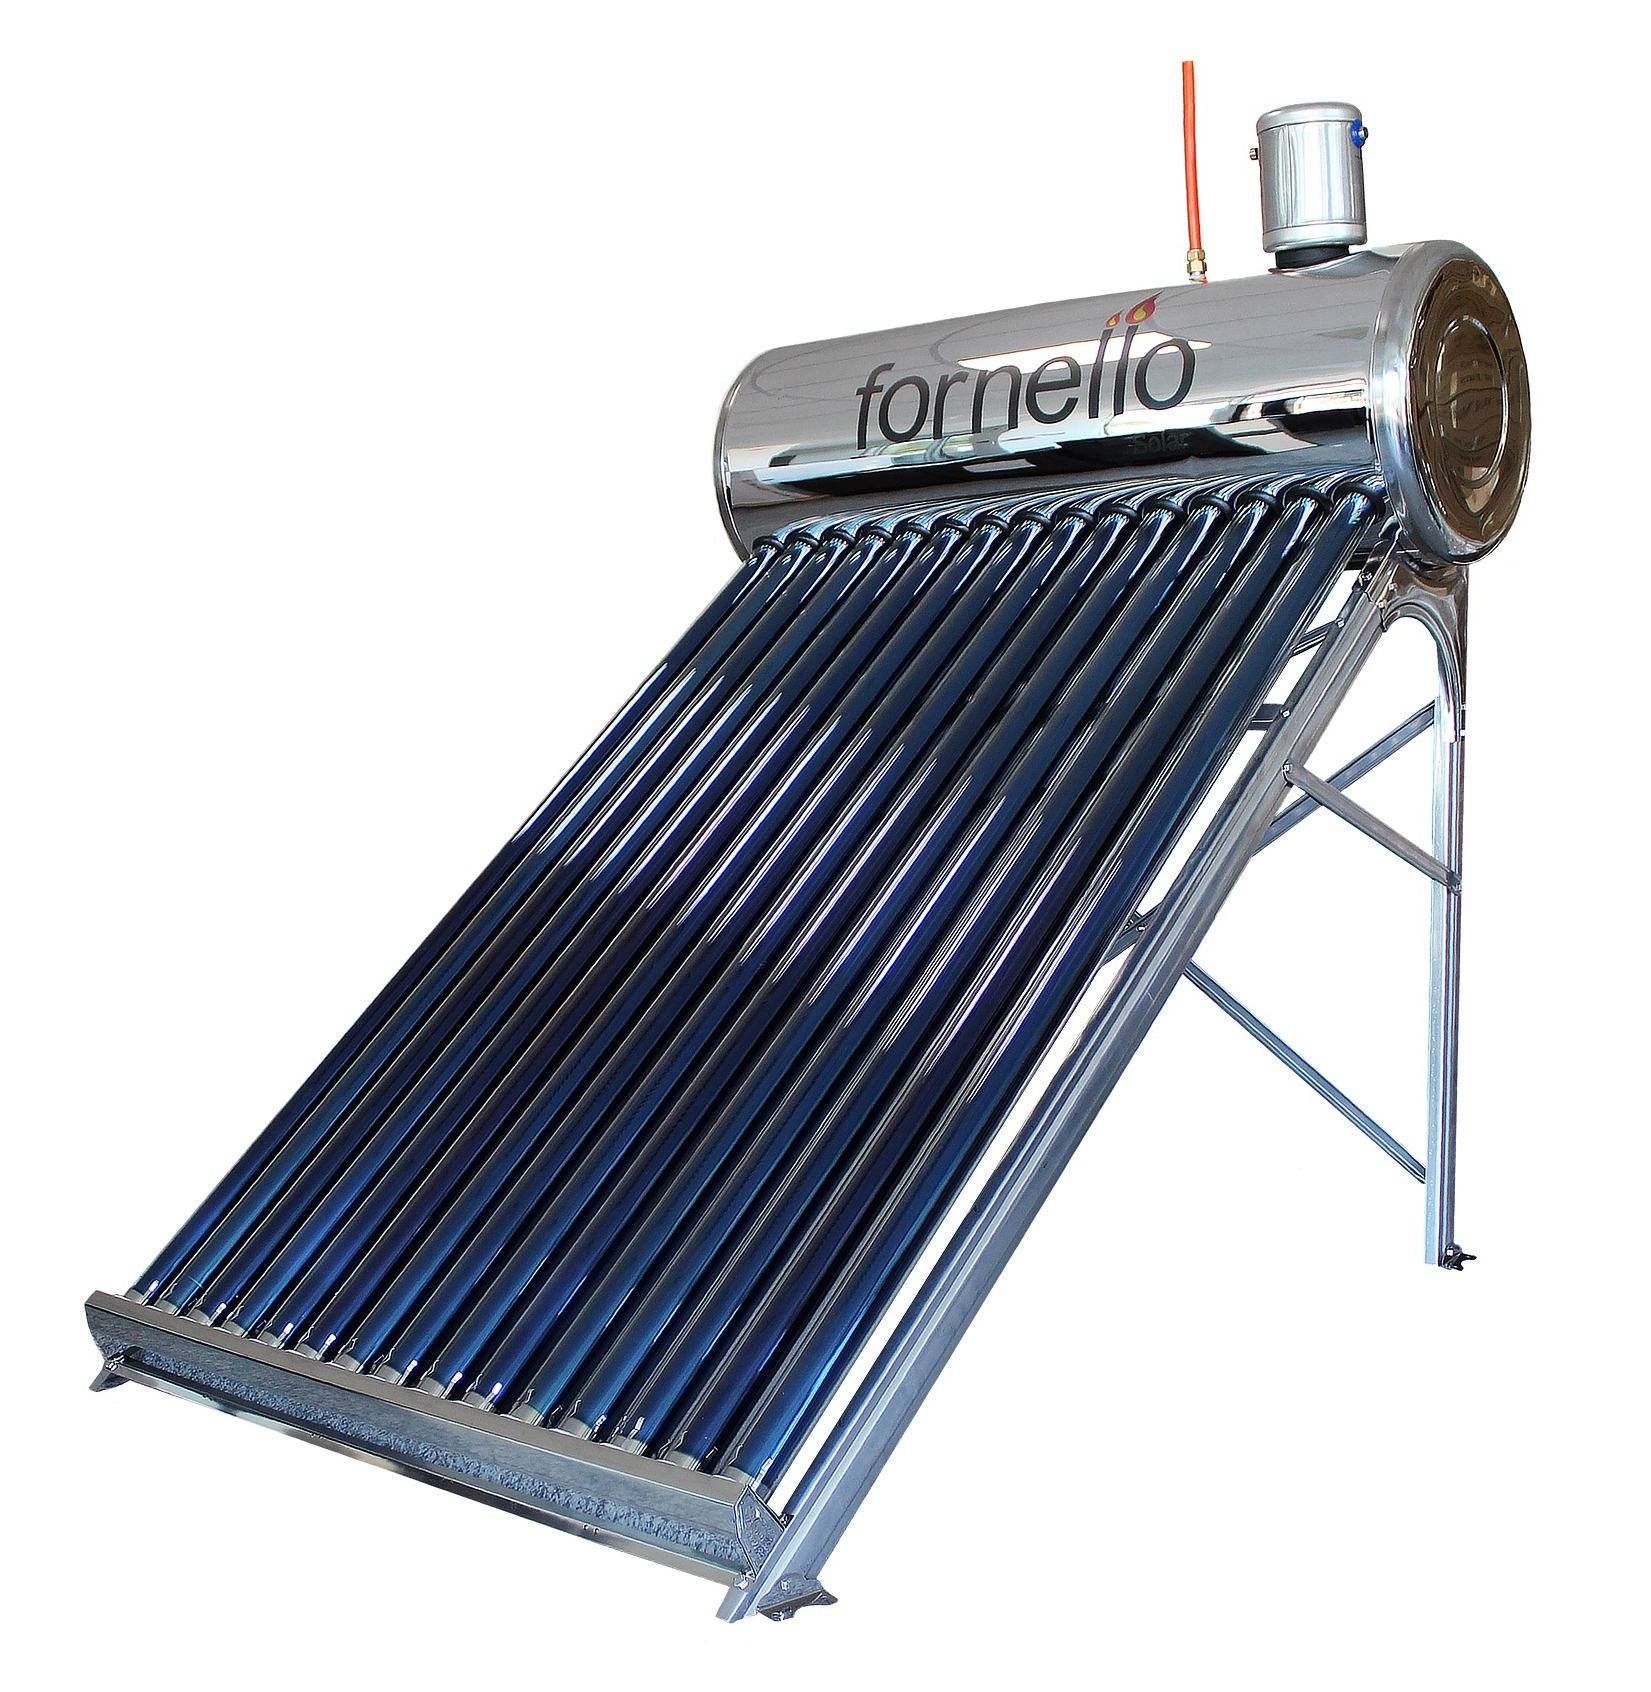 Panou solar nepresurizat Fornello pentru producere apa calda, cu rezervor inox 150 litri si 18 tuburi vidate Fornello imagine bricosteel.ro